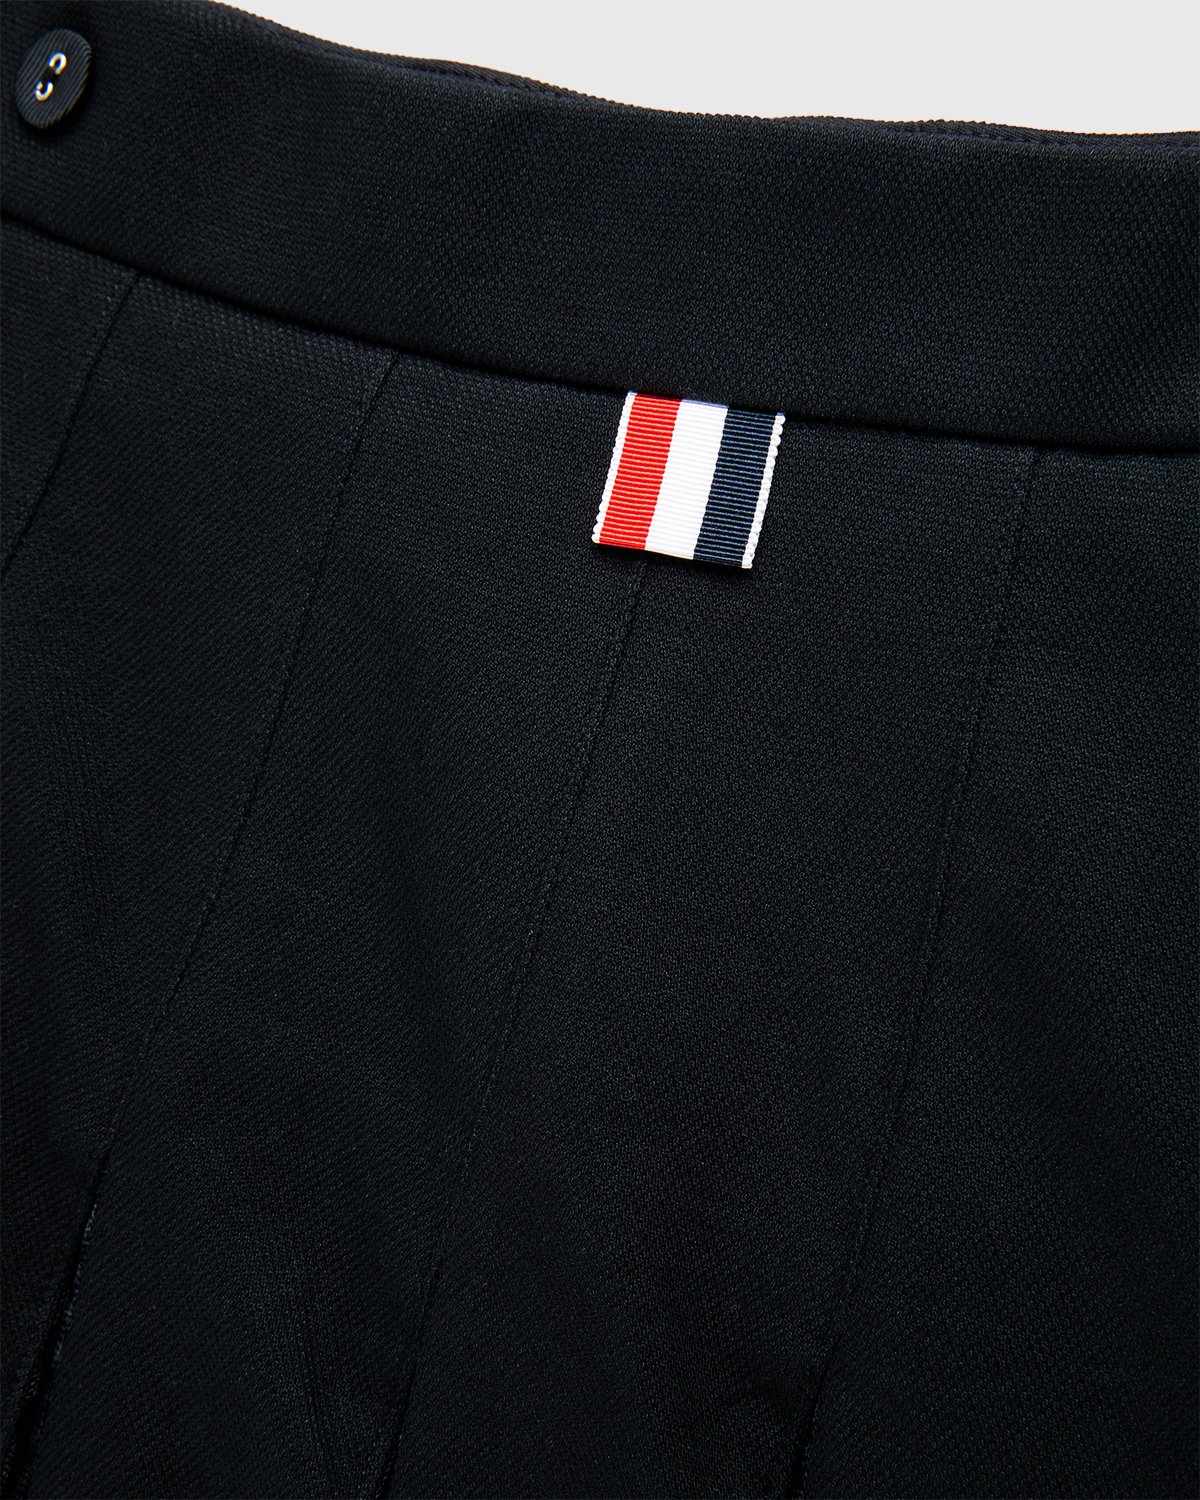 Thom Browne x Highsnobiety - Men's Pleated Mesh Skirt Black - Clothing - Black - Image 4